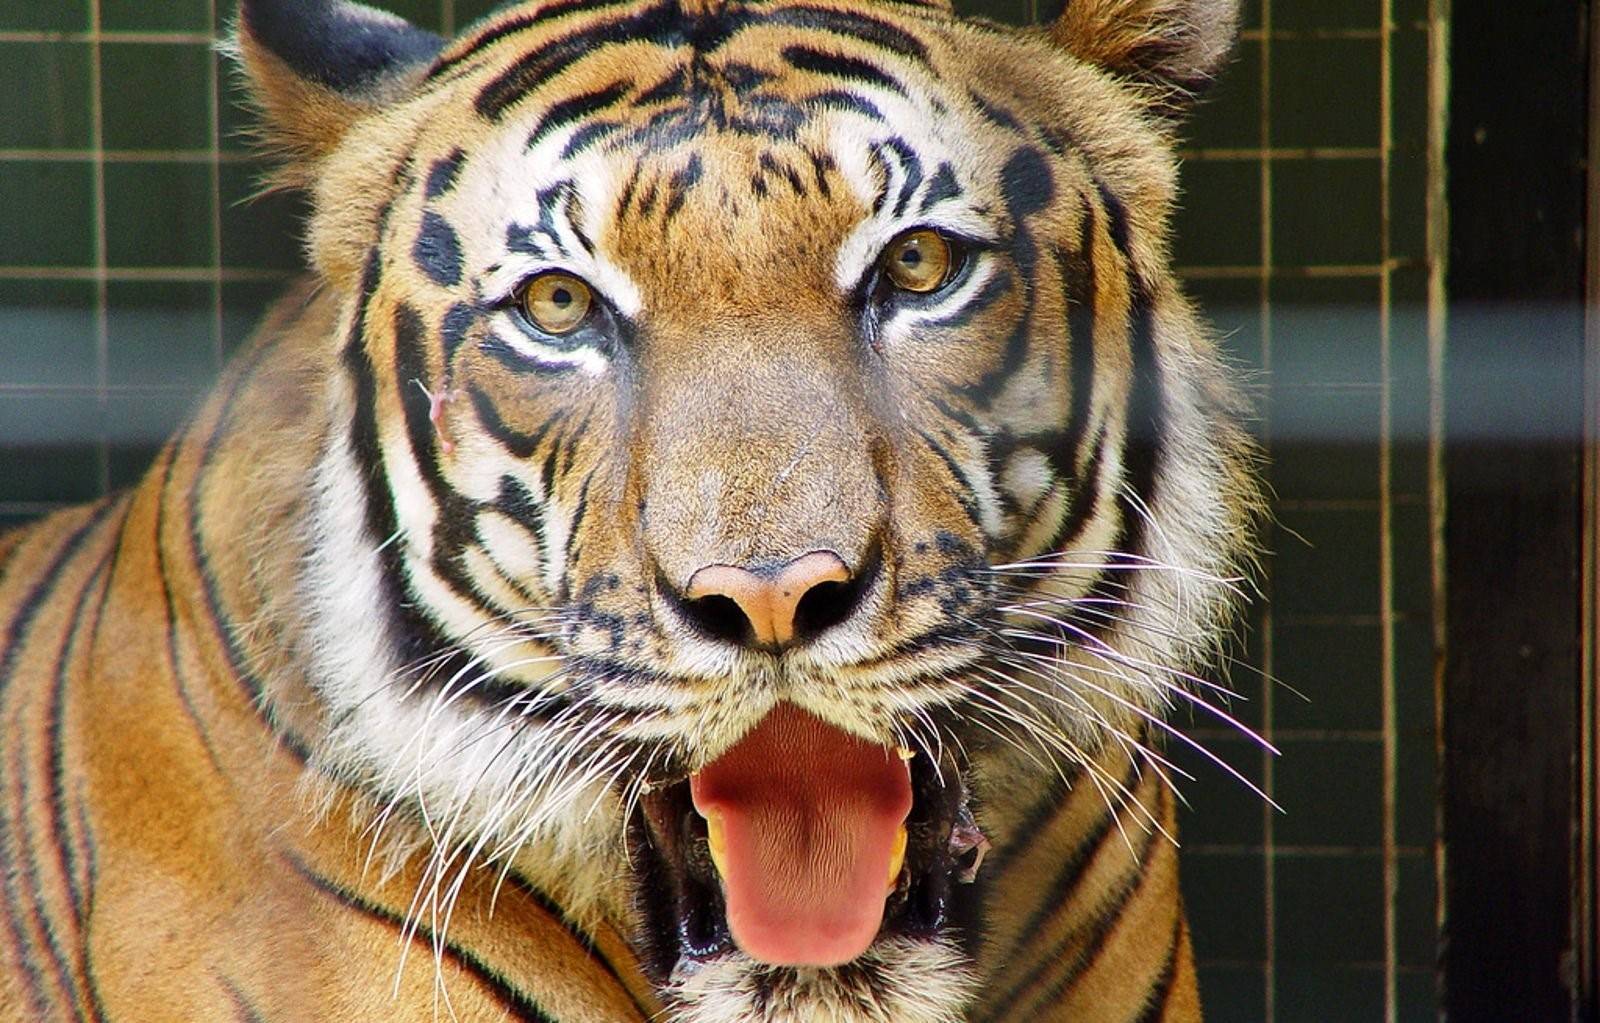 Картинки лиц животных. Сенегальский тигр. Лицо тигра. Морды тигров. Тигр морда.